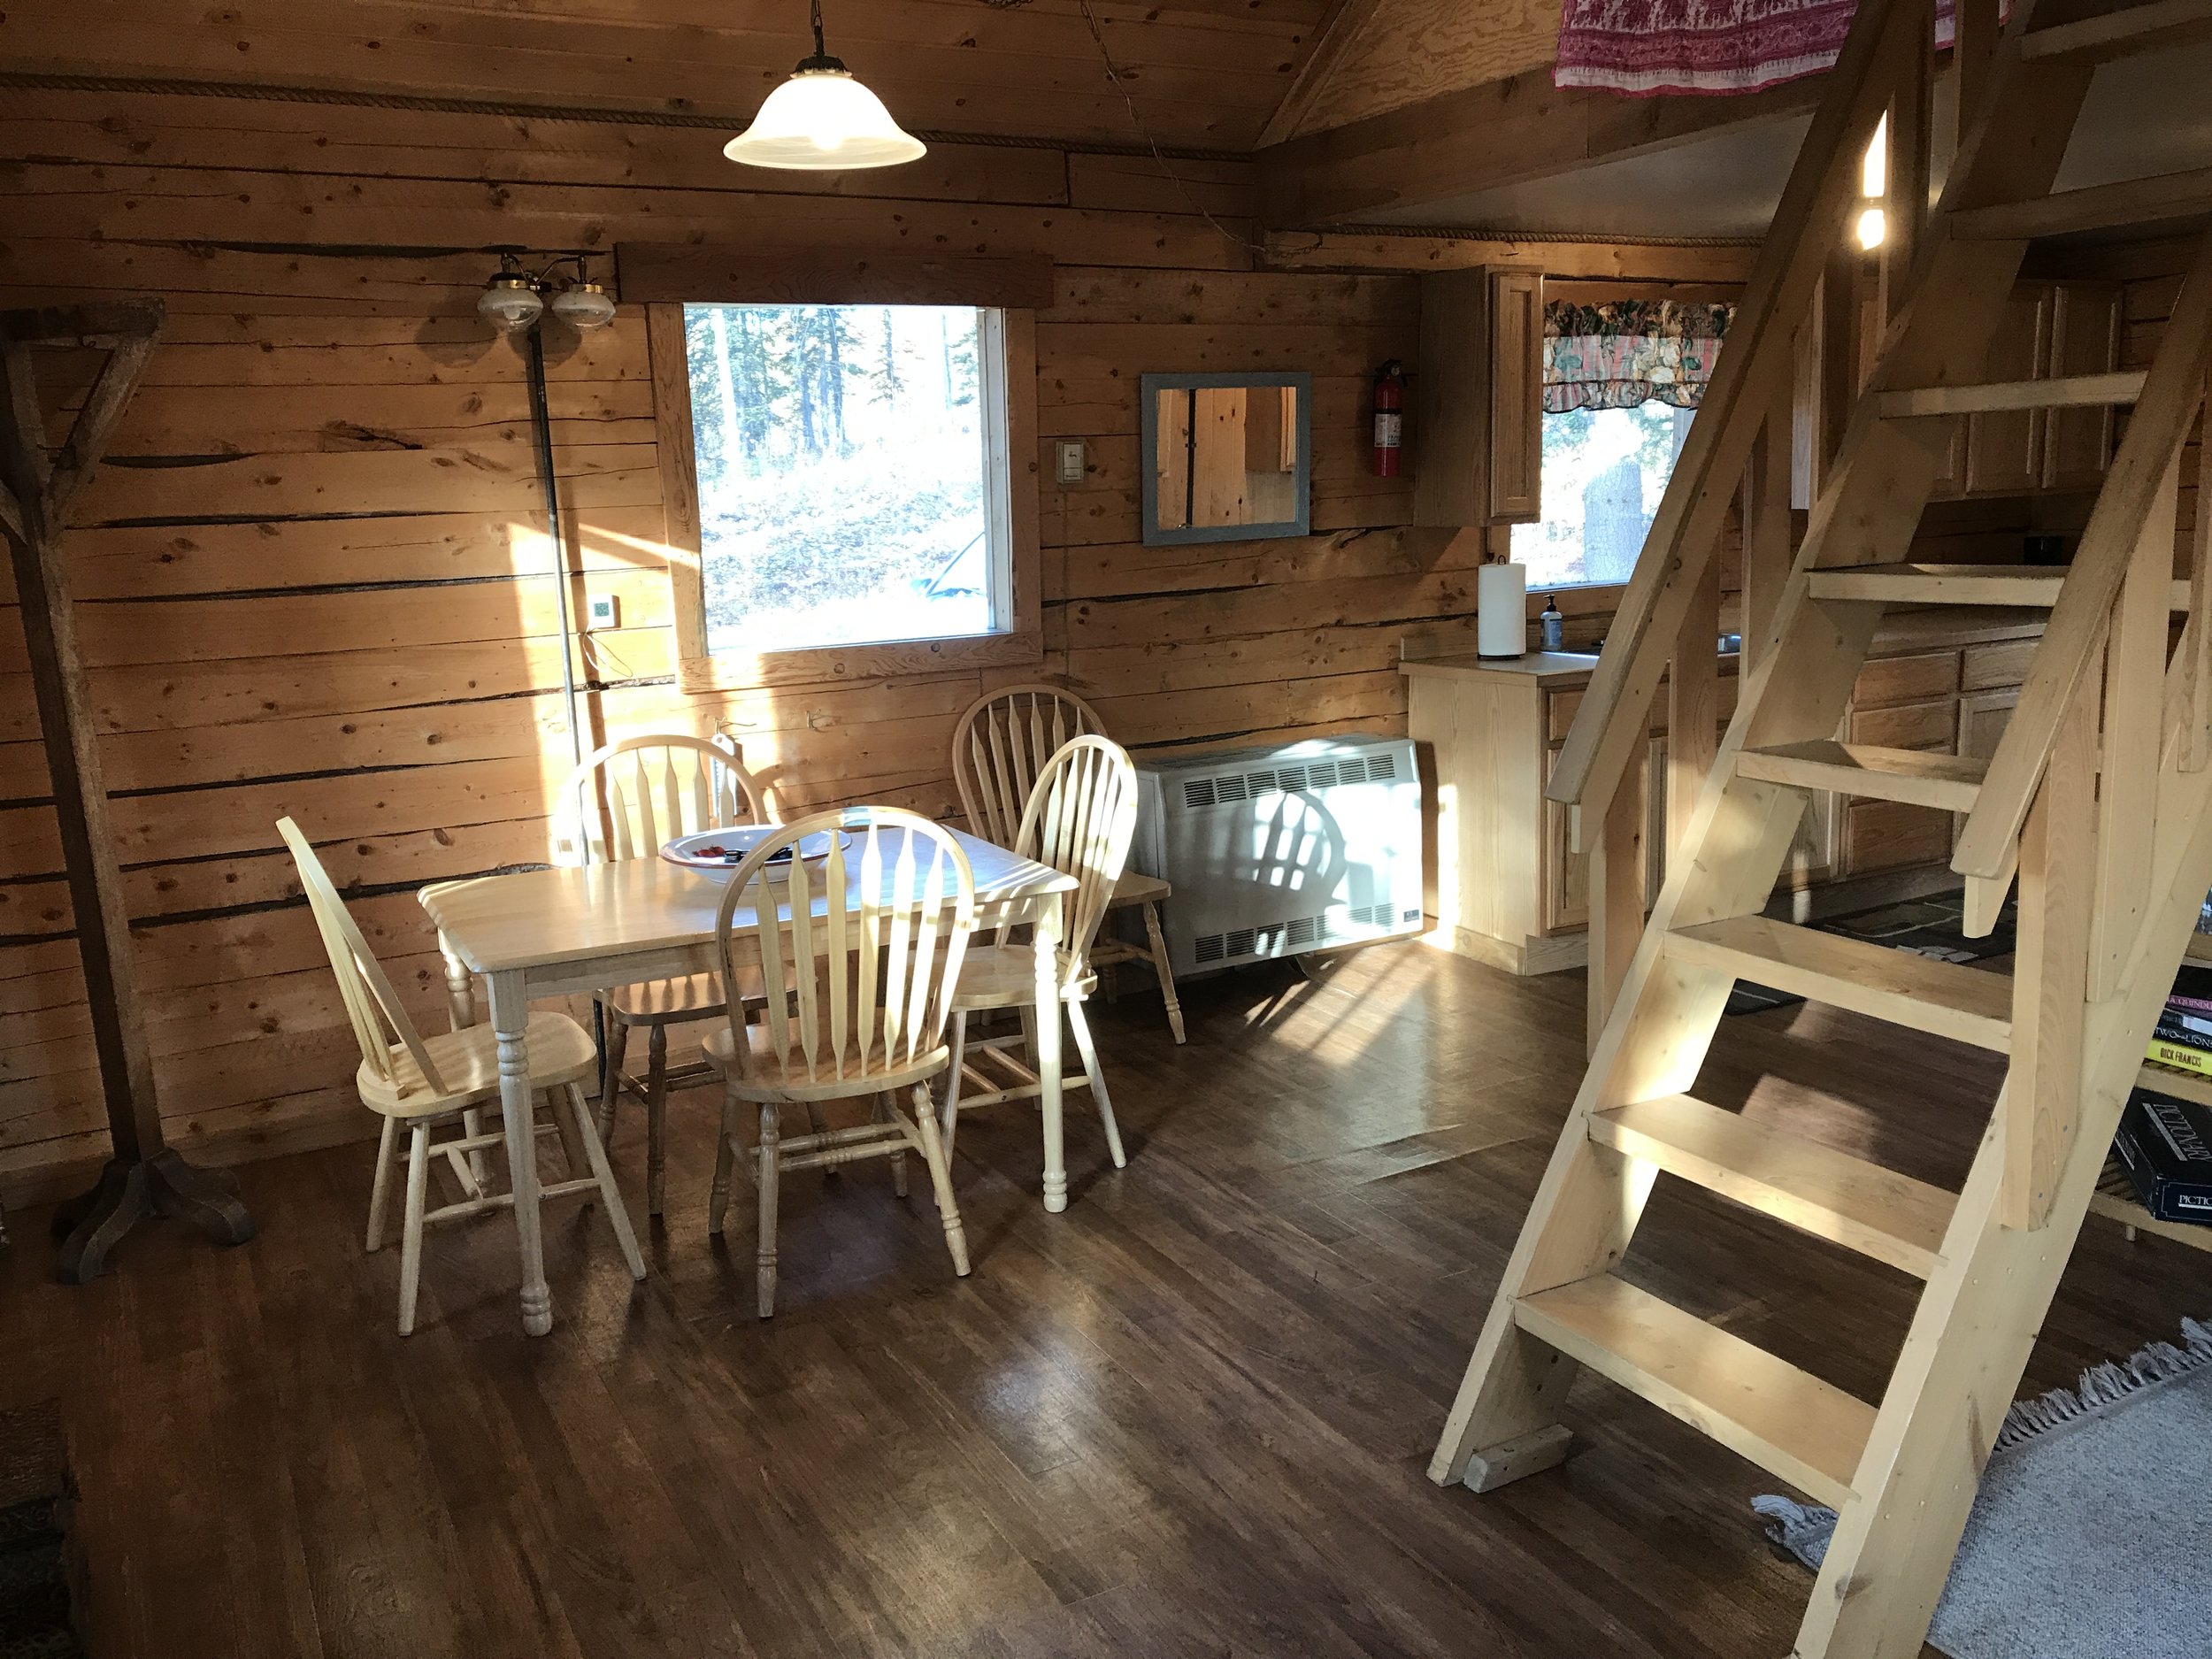  Bluff Cabin interior 